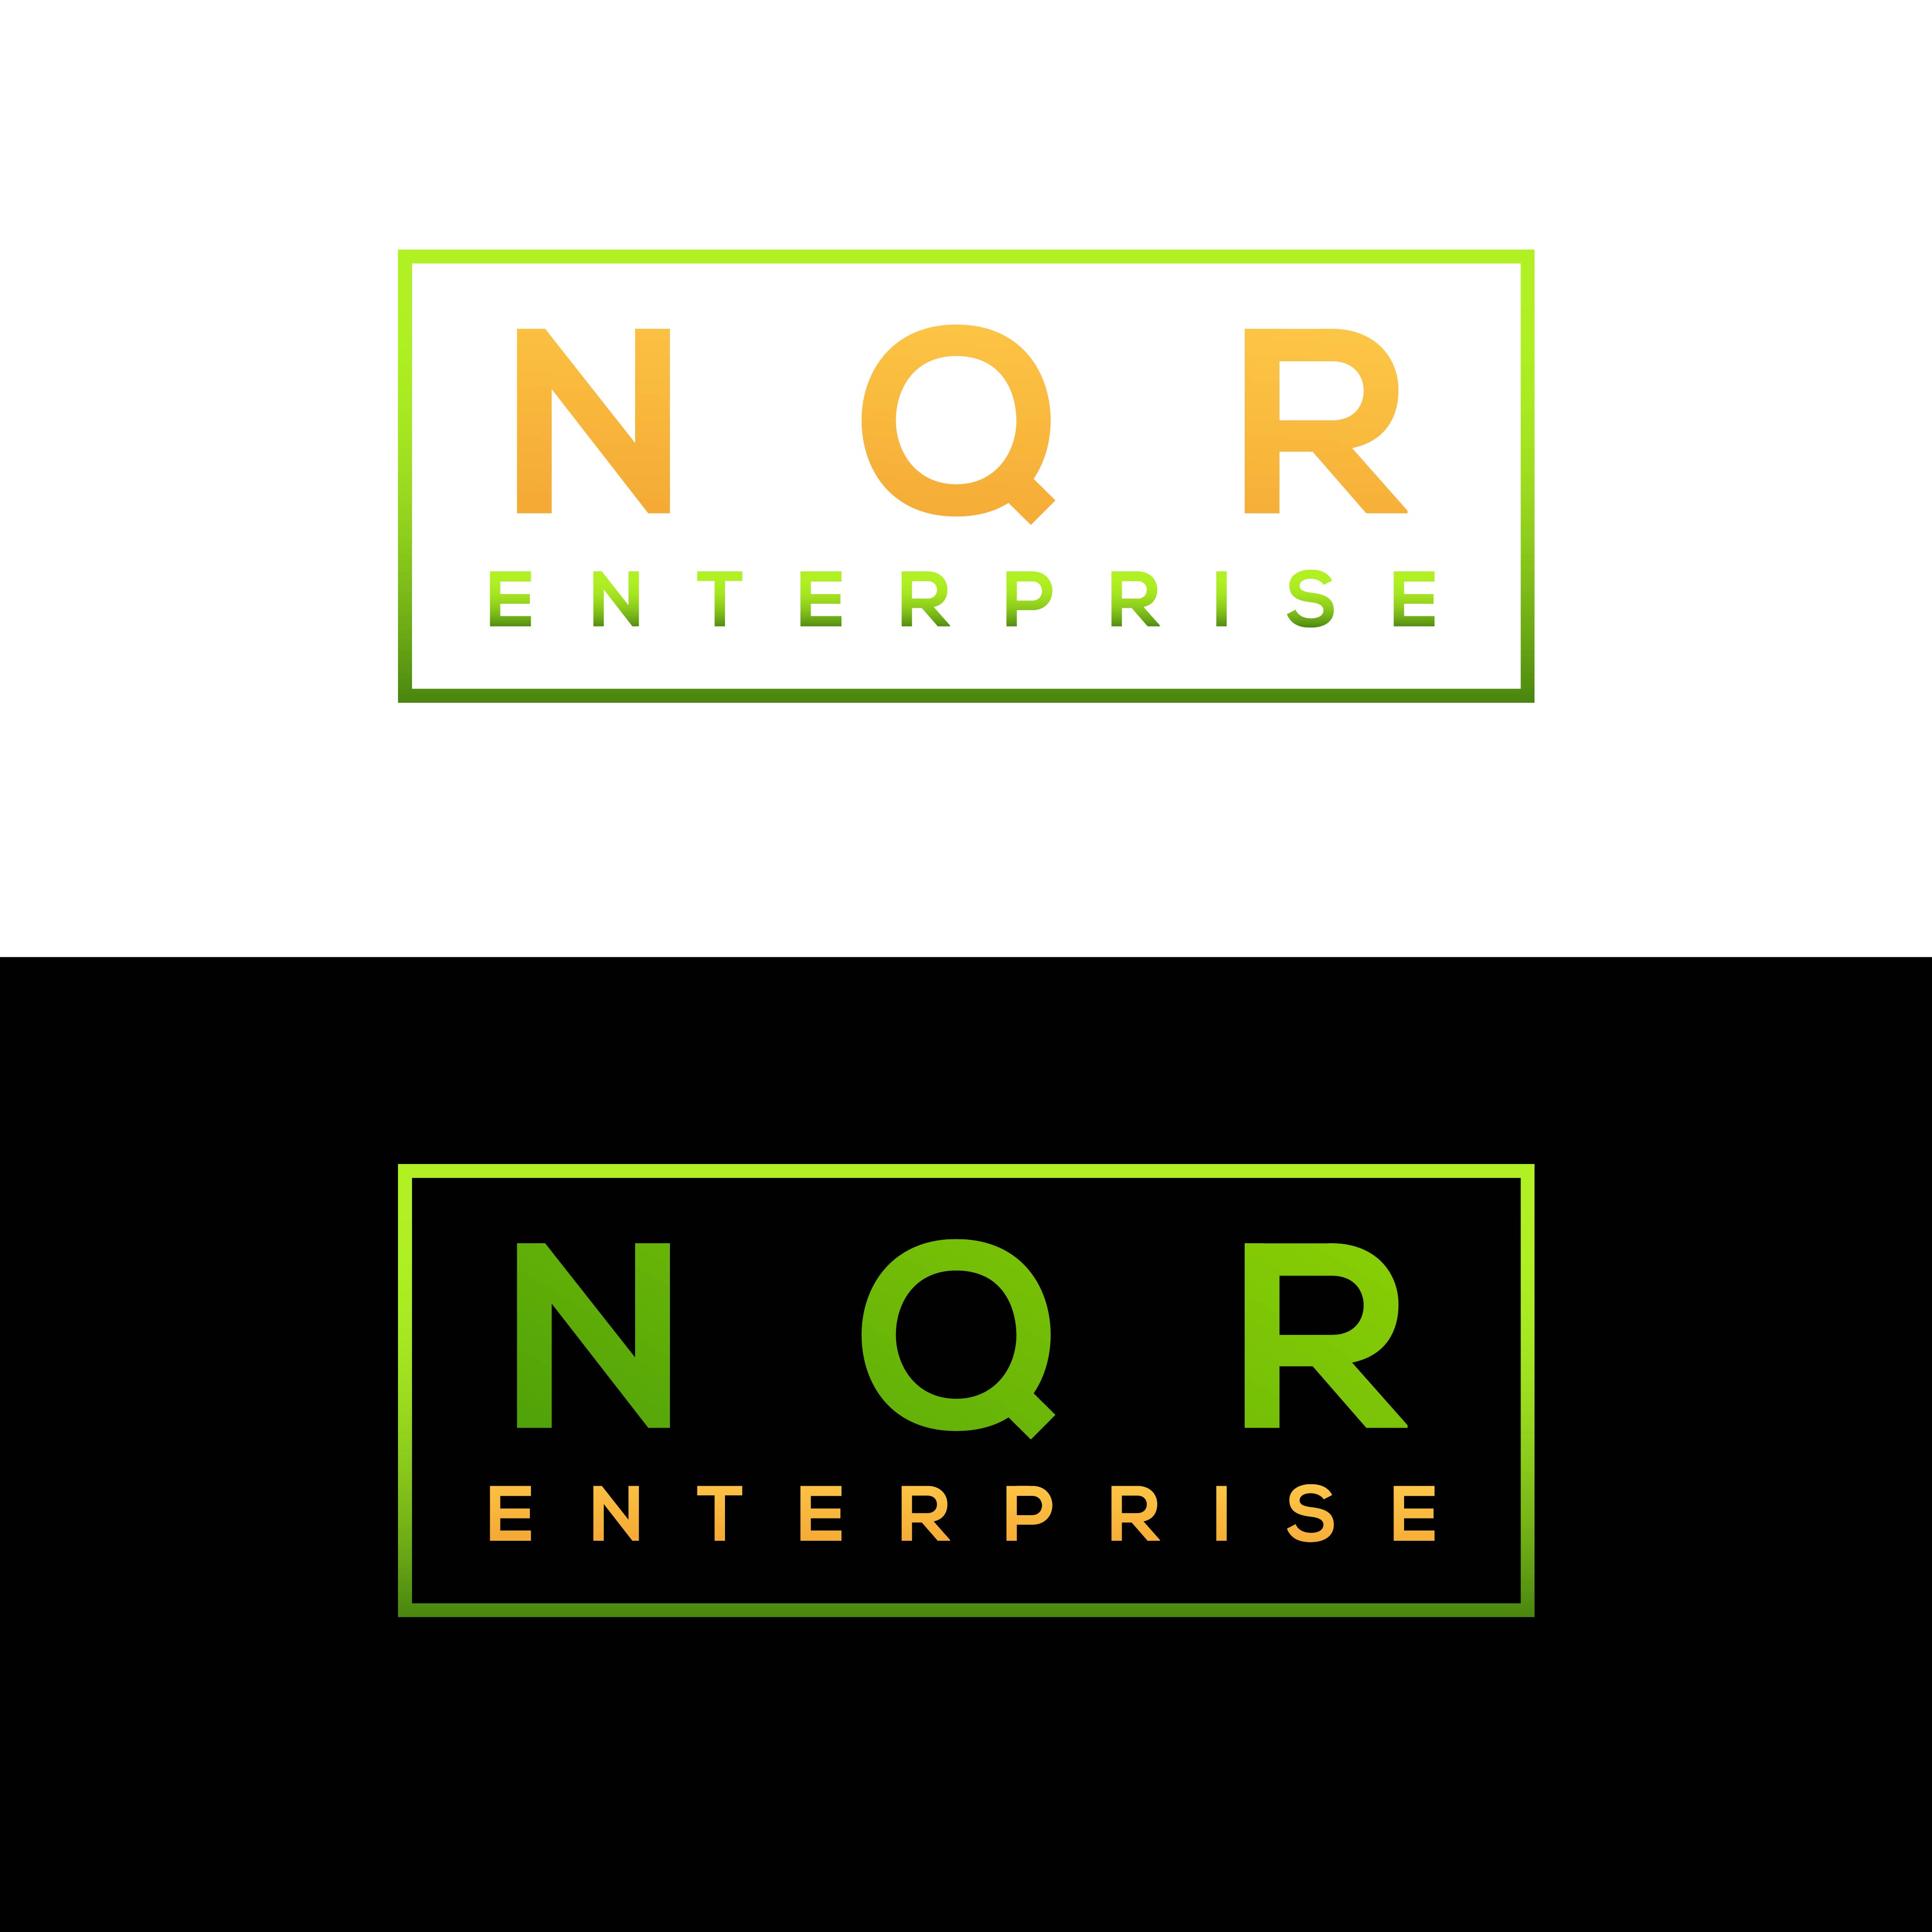 Logo Design entry 2164148 submitted by Pangestika to the Logo Design for NQR Enterprises run by Matt.geinert@gmail.com